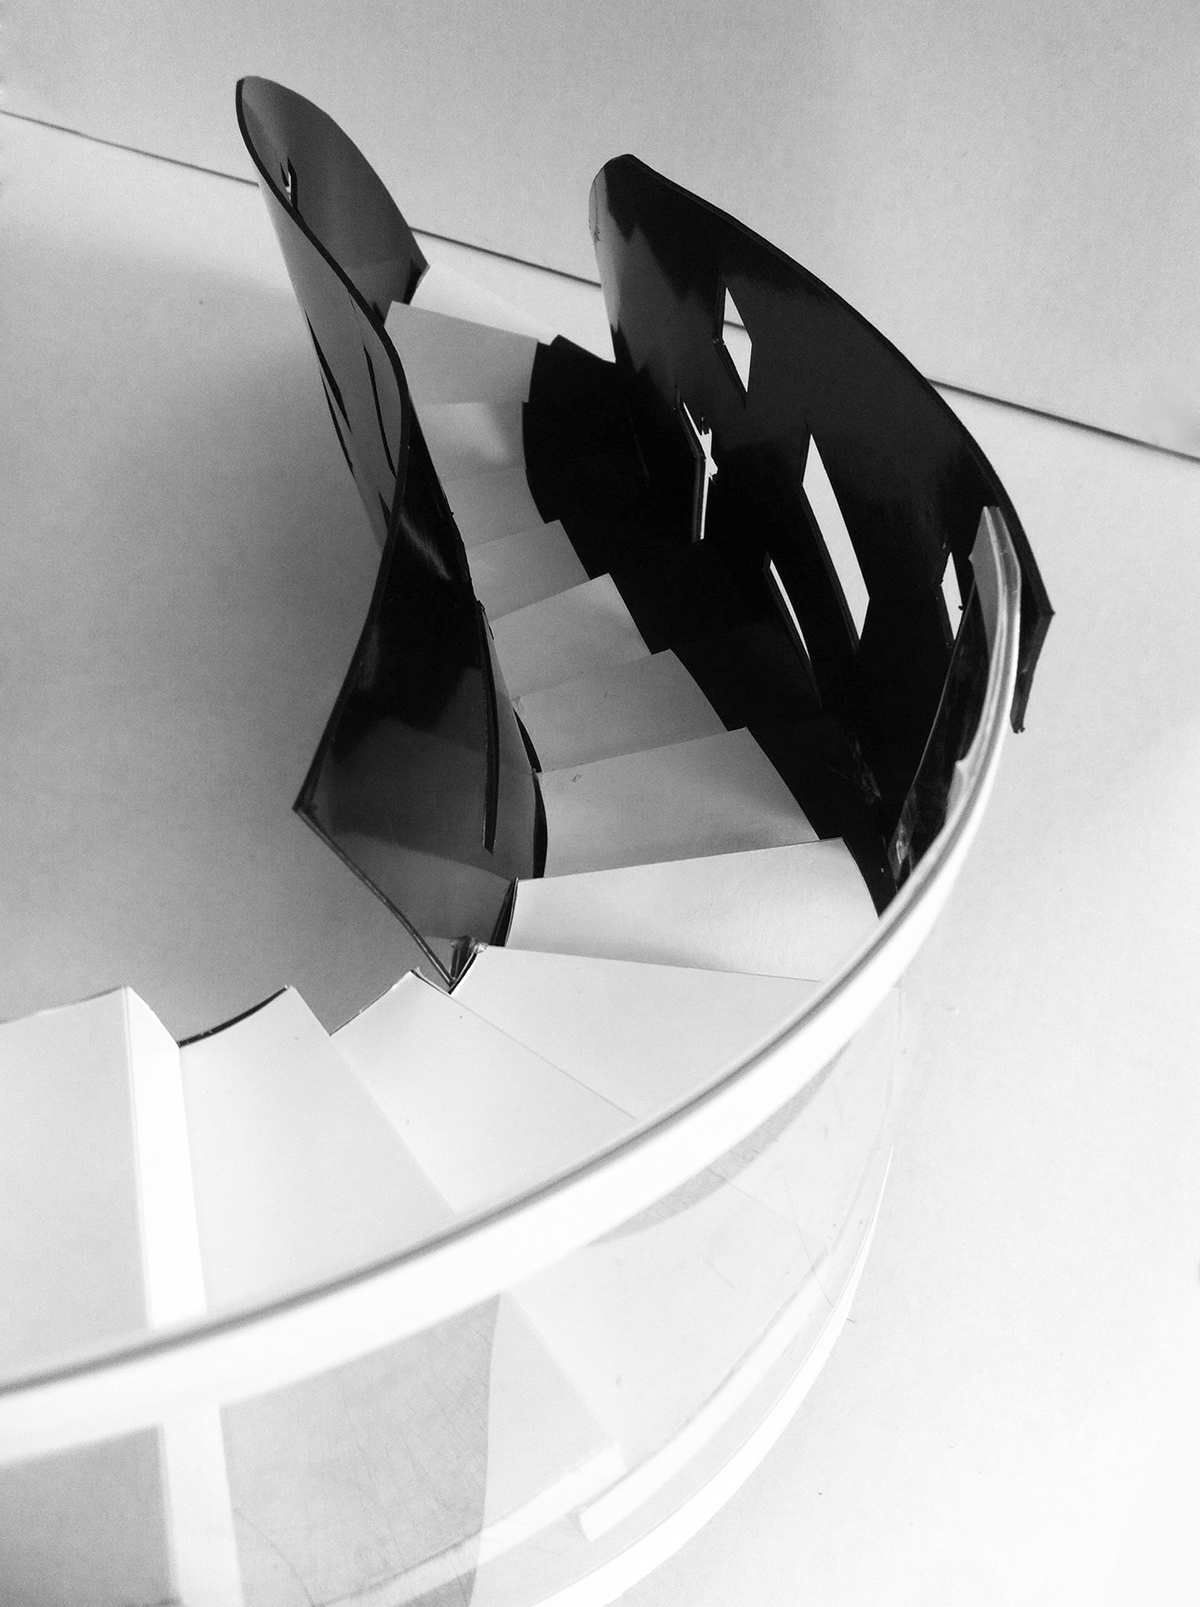 stairs Spiral threshold movement dynamics black White optical illustion making design principles